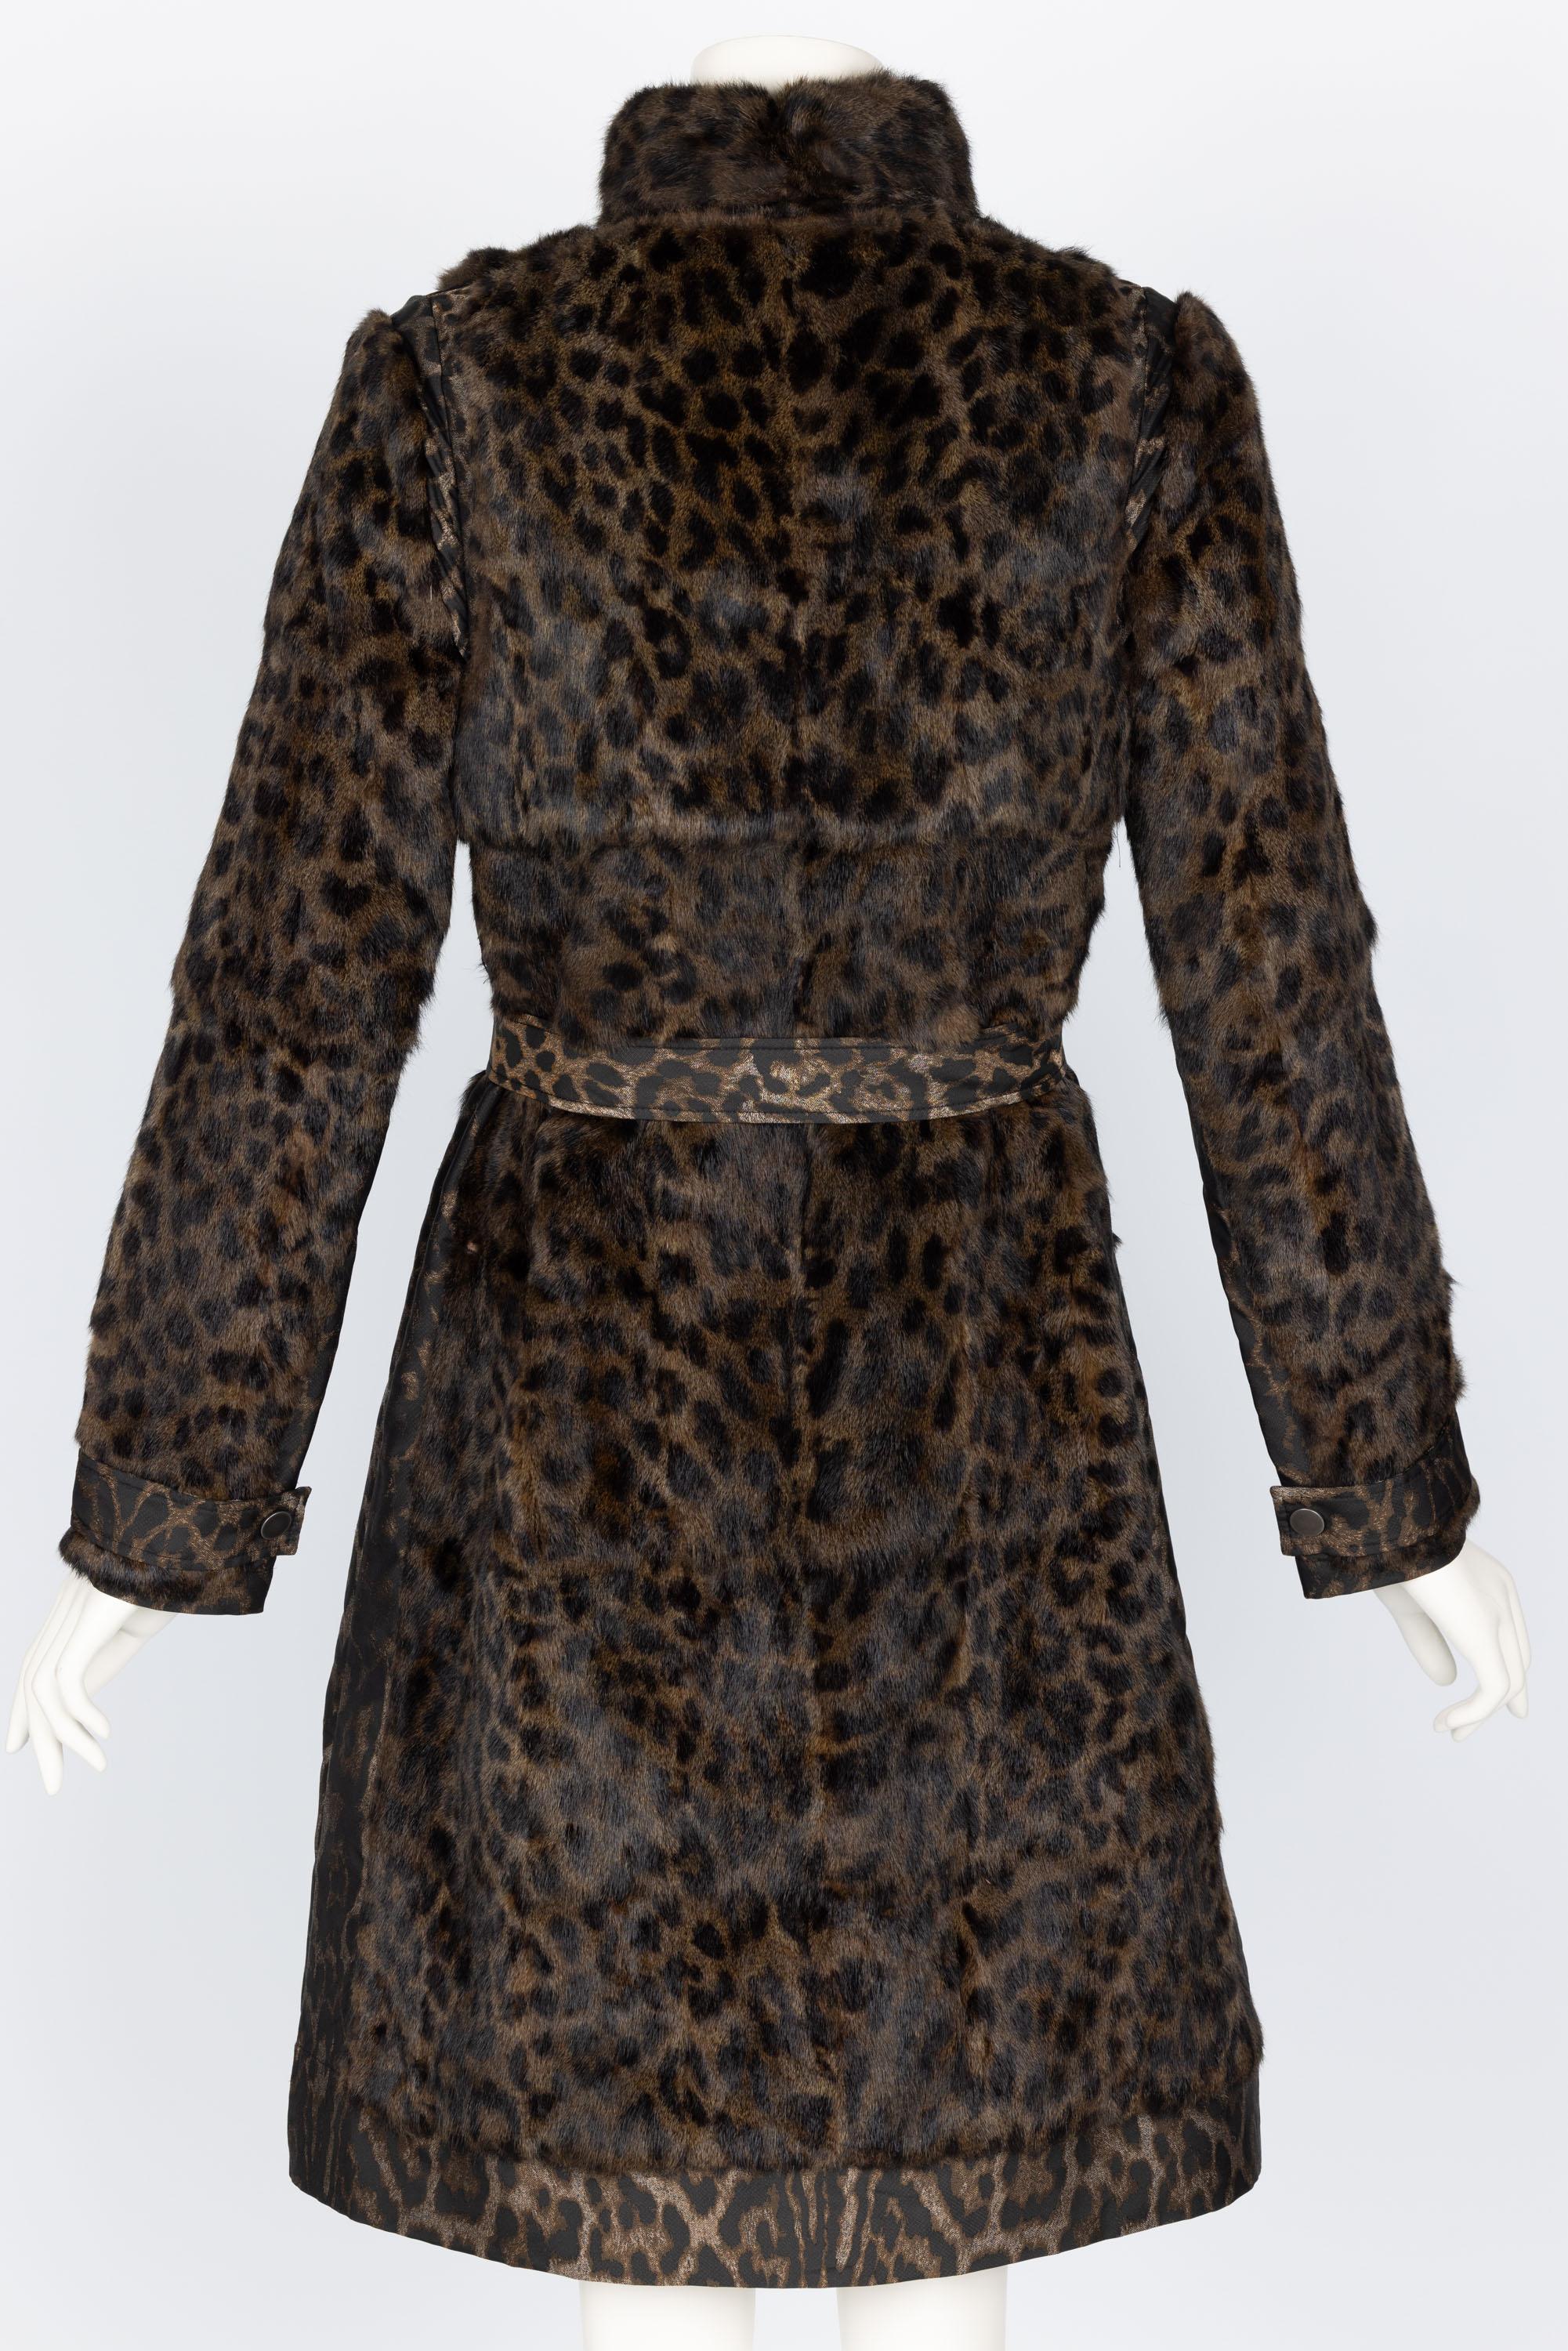 Lanvin Alber Elbaz F/W 2013 Leopard Fur & Taffeta Belted Trench Coat In Excellent Condition For Sale In Boca Raton, FL